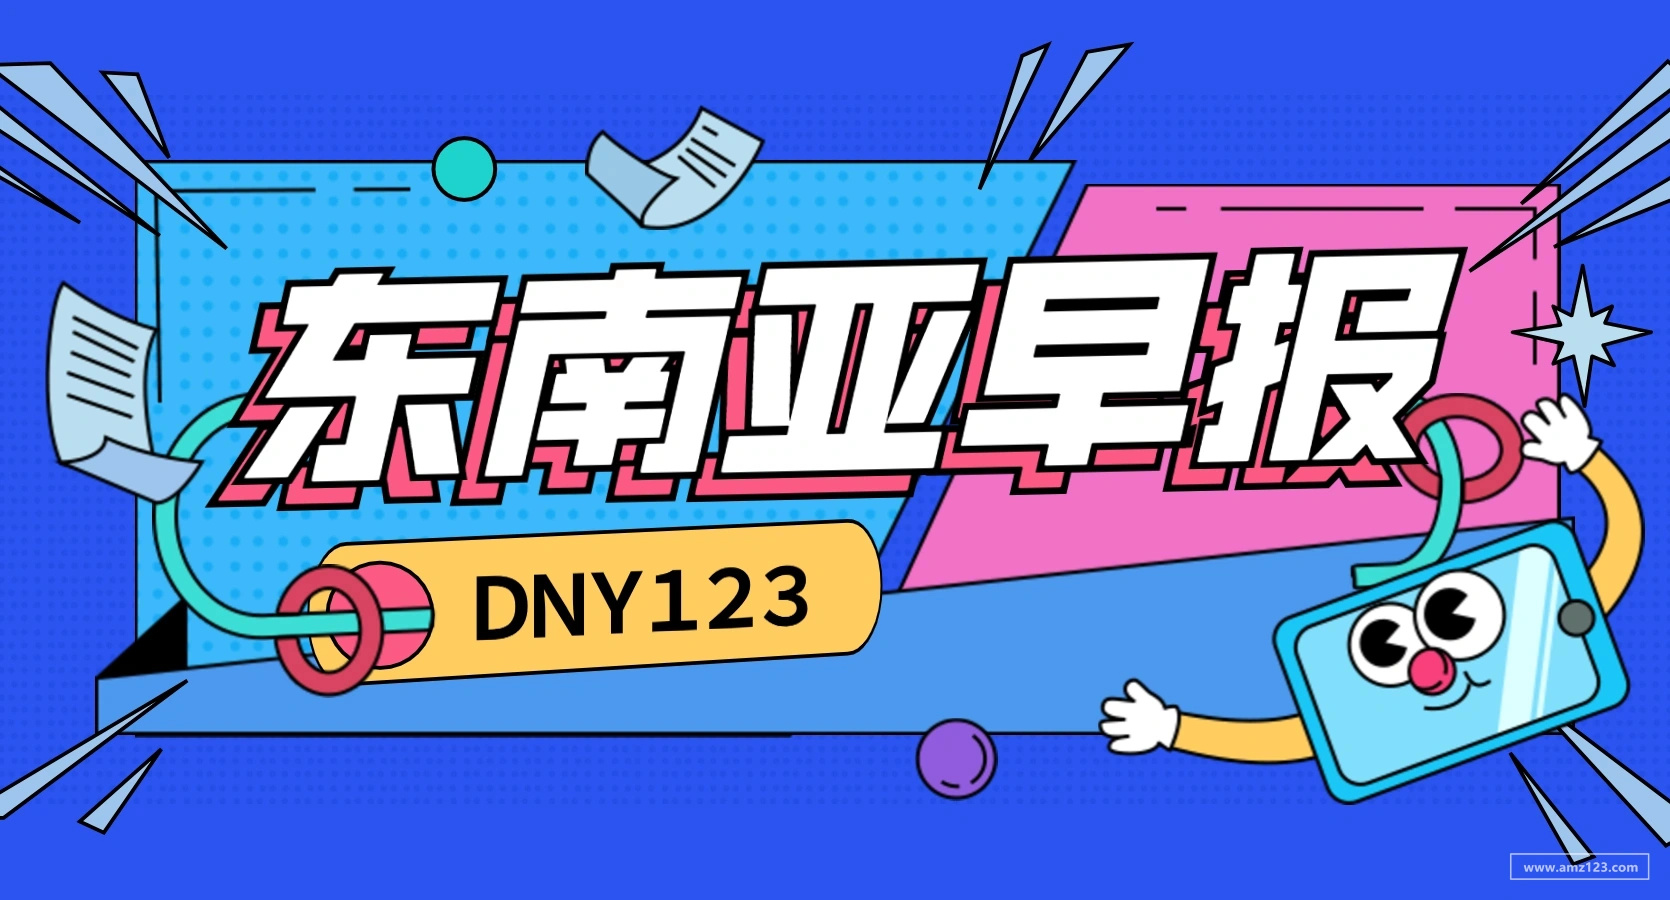 【DNY123跨境早报】Shopee马来海外仓修改入库审核规则，新加坡时尚电商平台Zilingo计划融资1.5至2亿美元